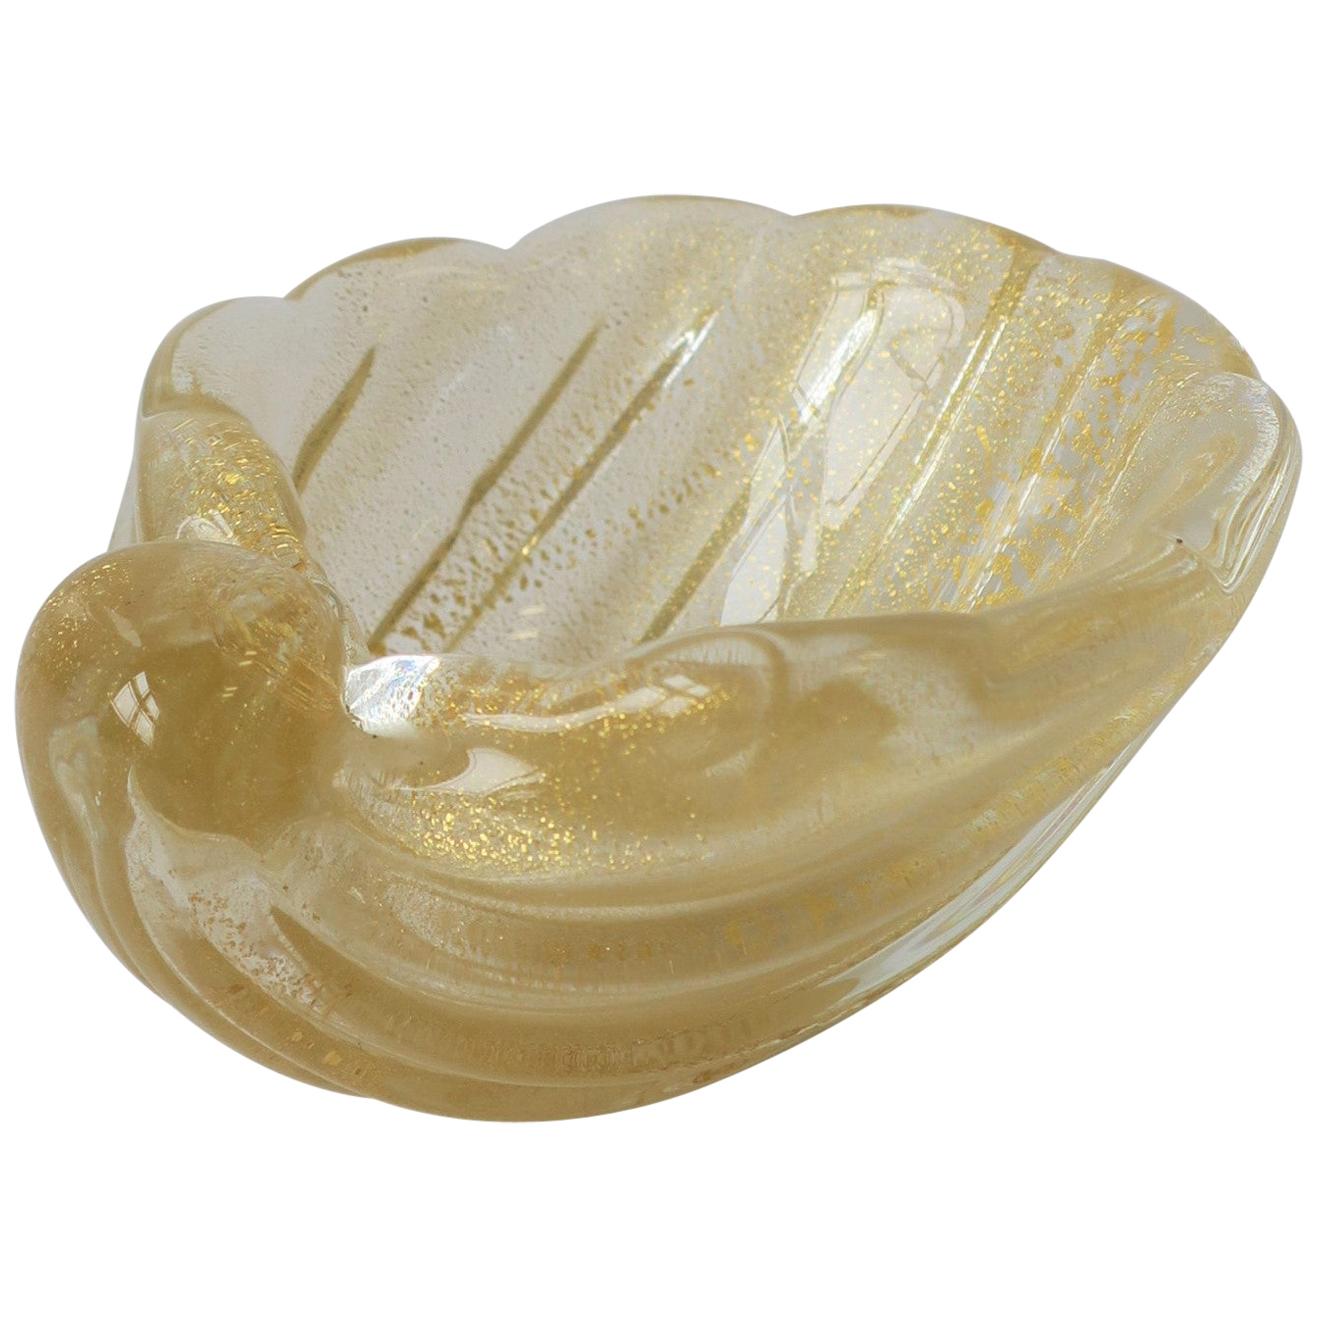 Italian Murano Gold Art Glass Seashell Form Bowl Jewelry Dish